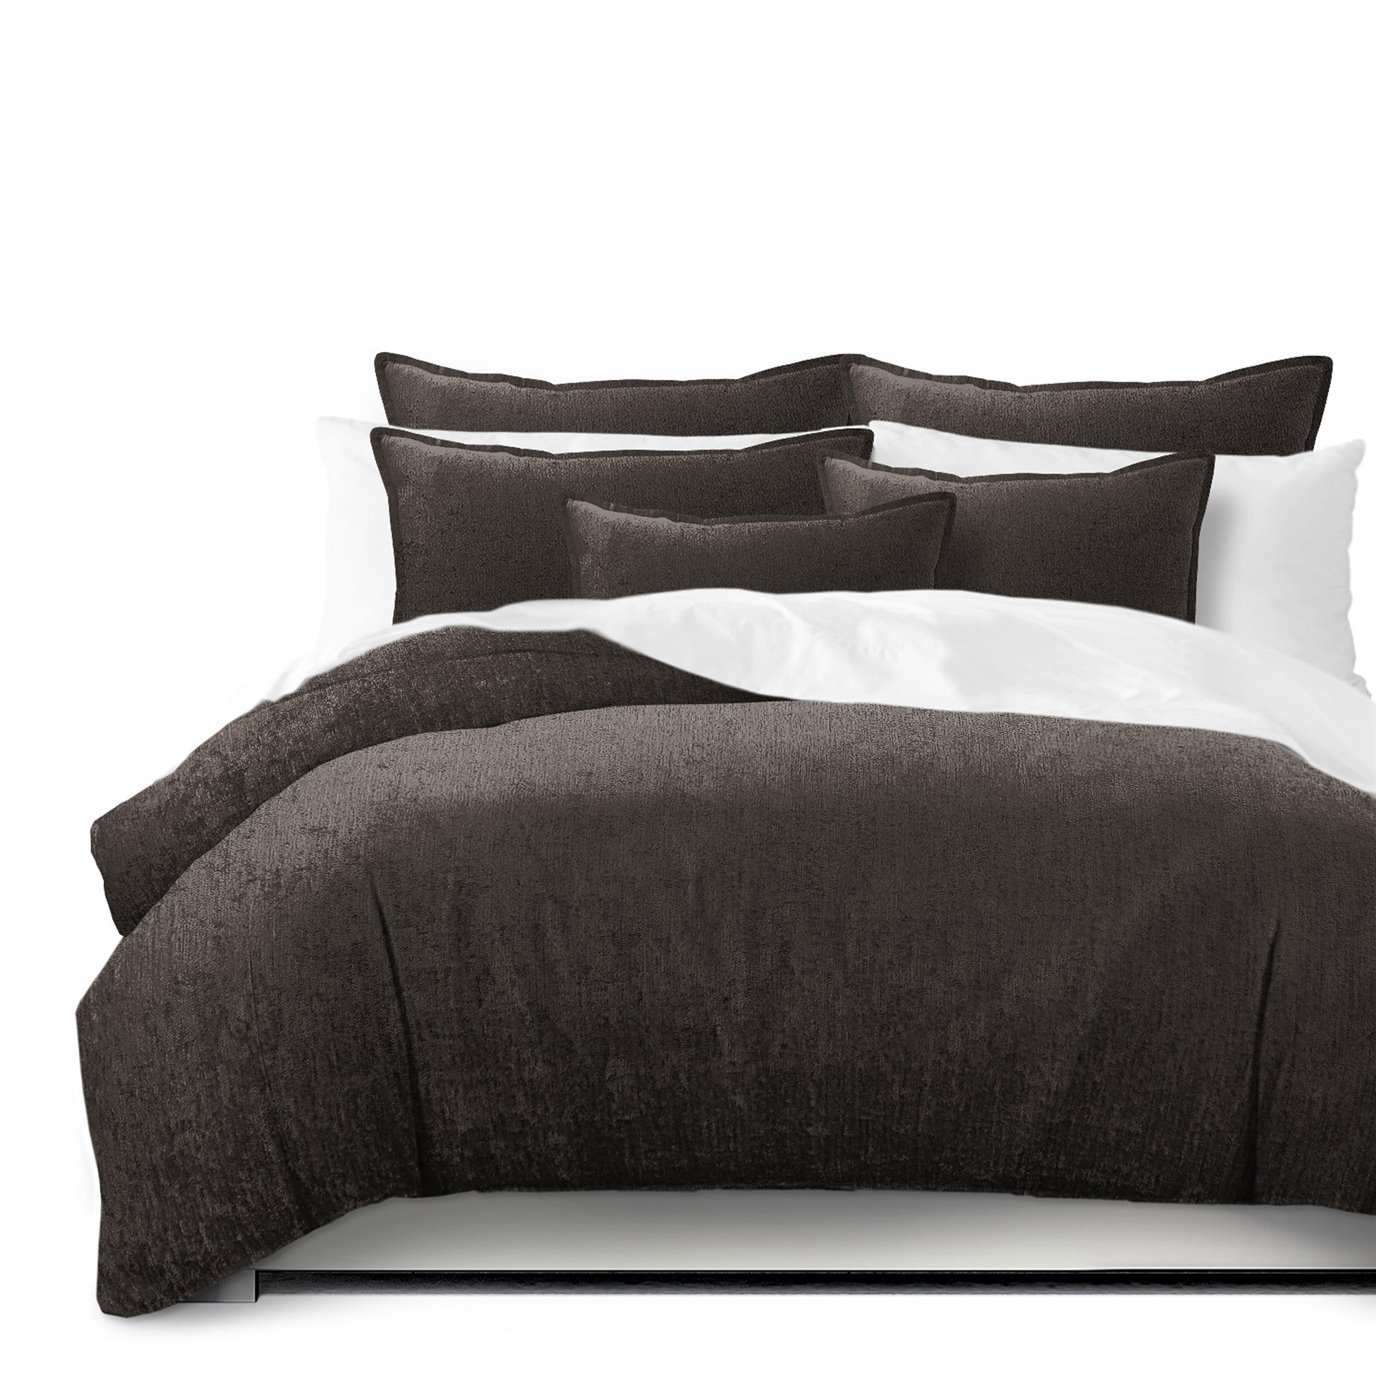 Juno Velvet Chocolate Comforter and Pillow Sham(s) Set - Size Queen